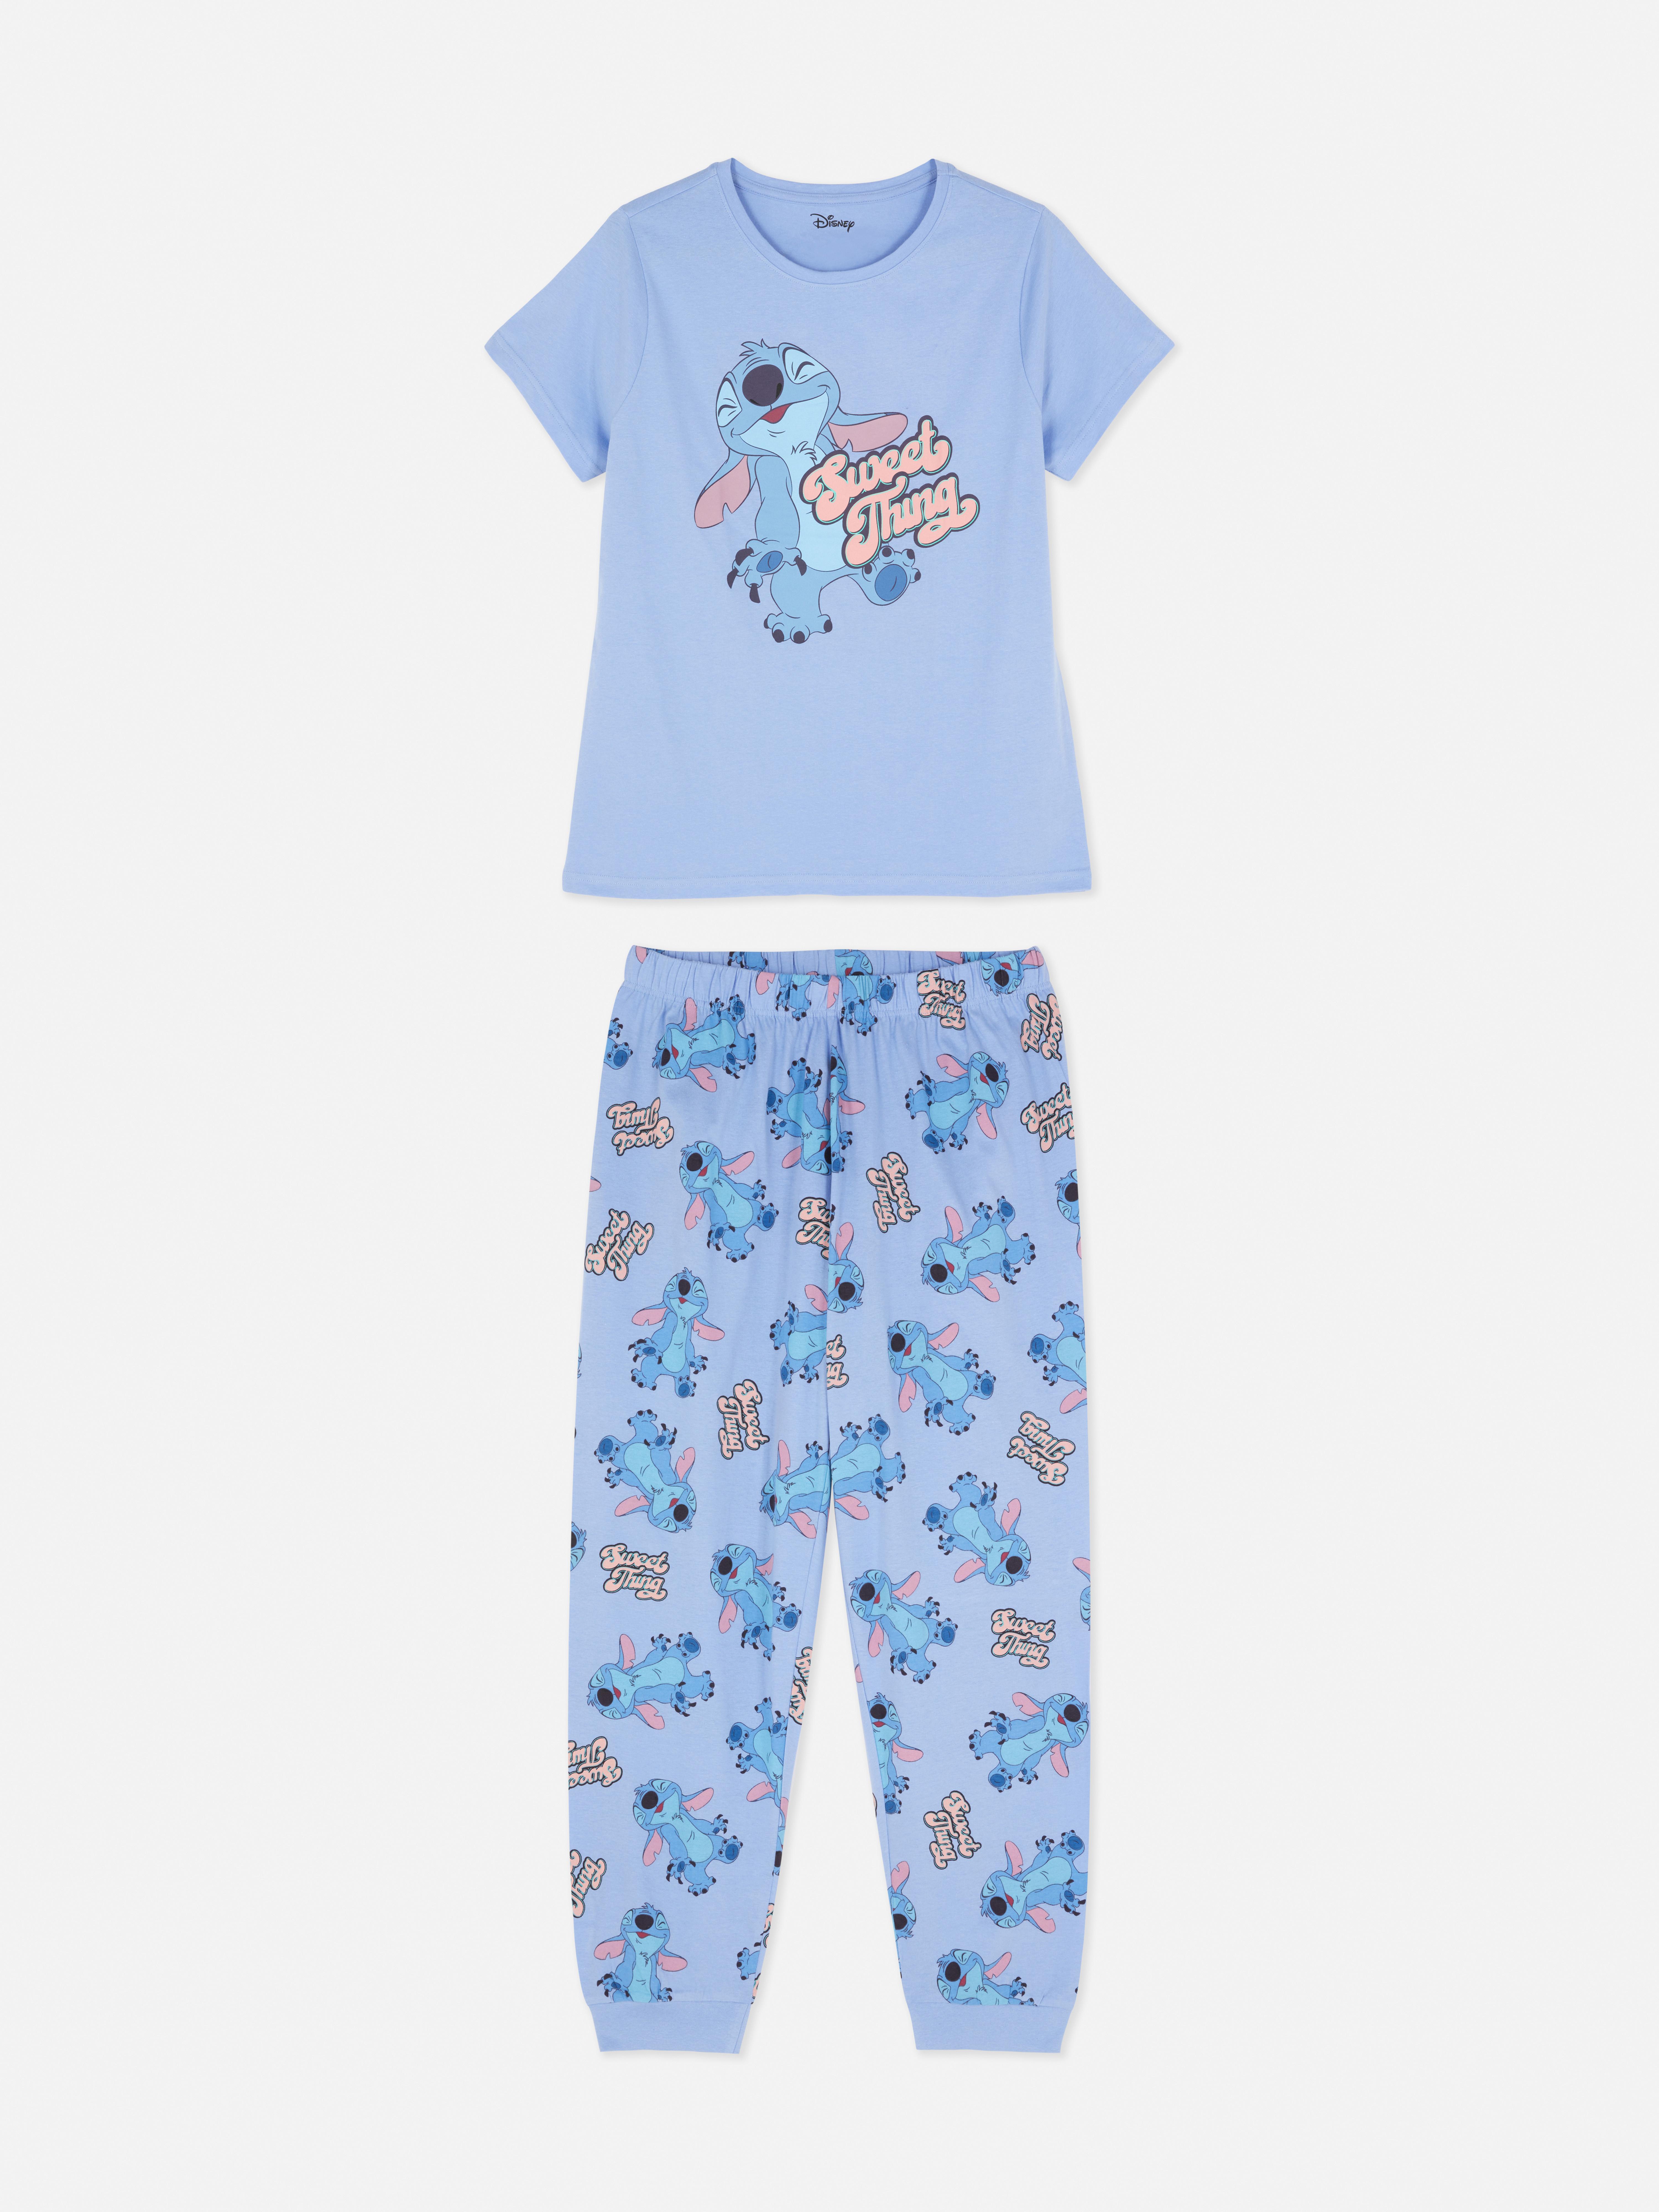 Disney's Character Graphic Pyjama Set